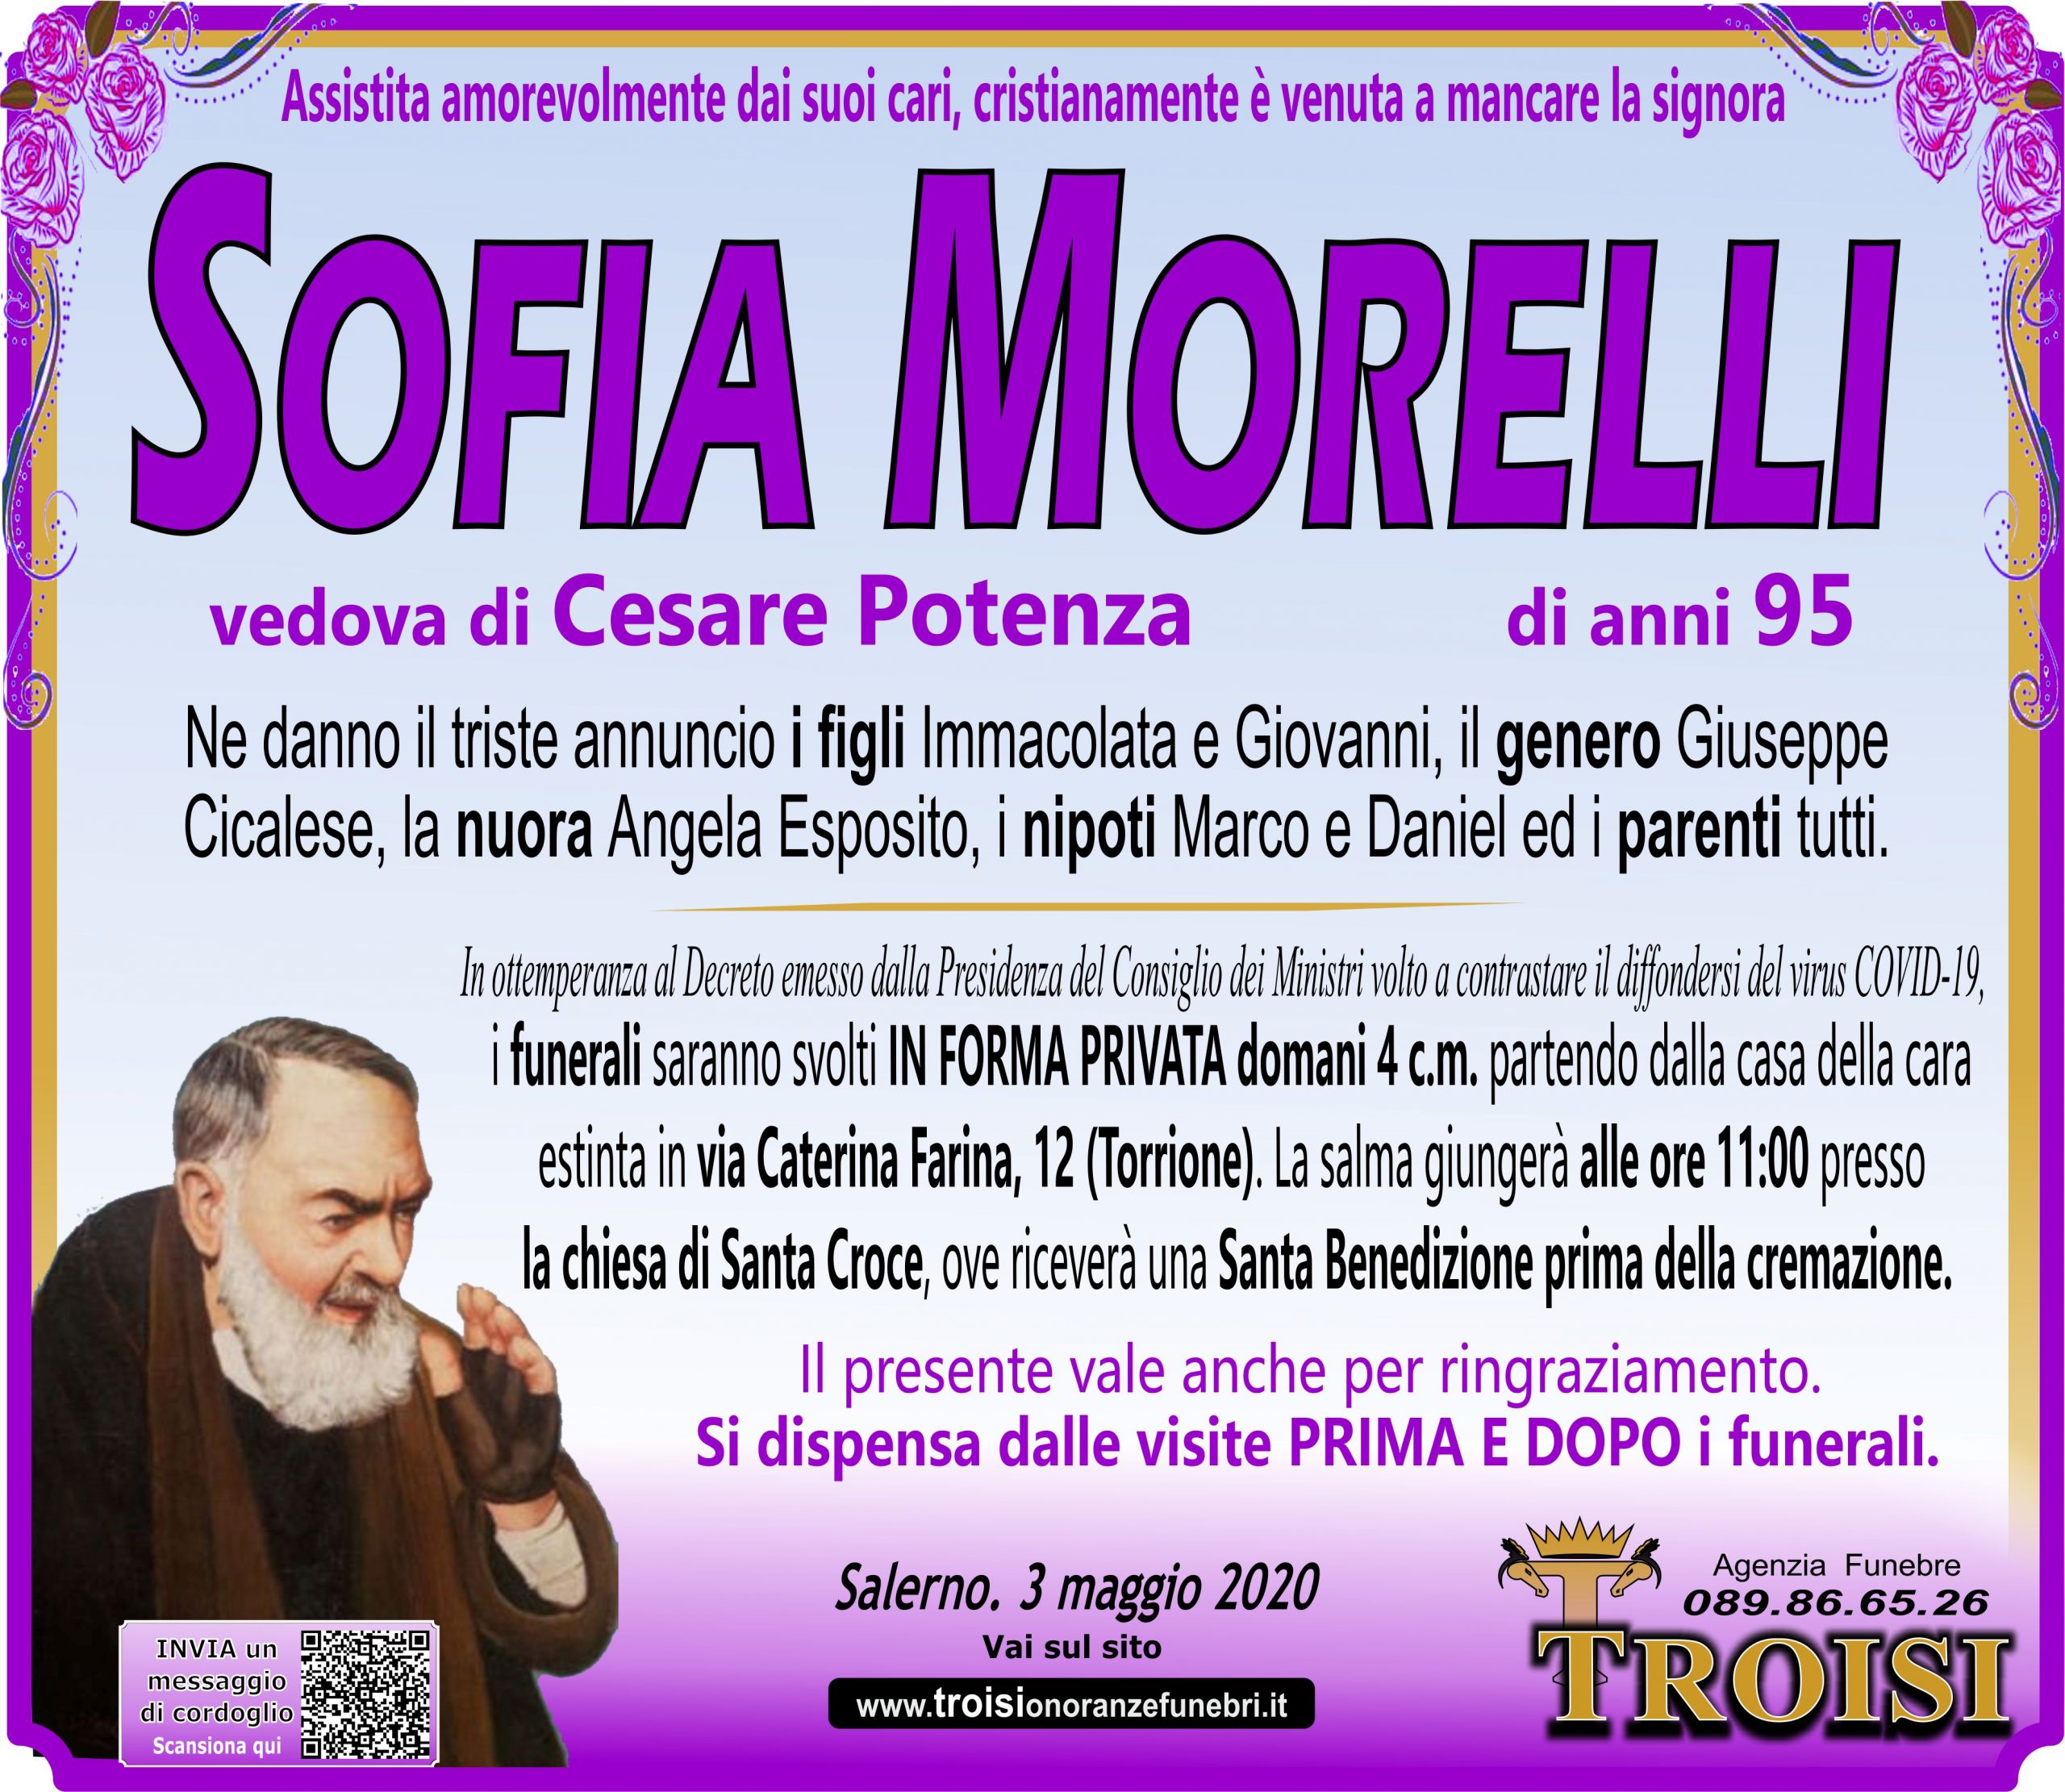 SOFIA MORELLI